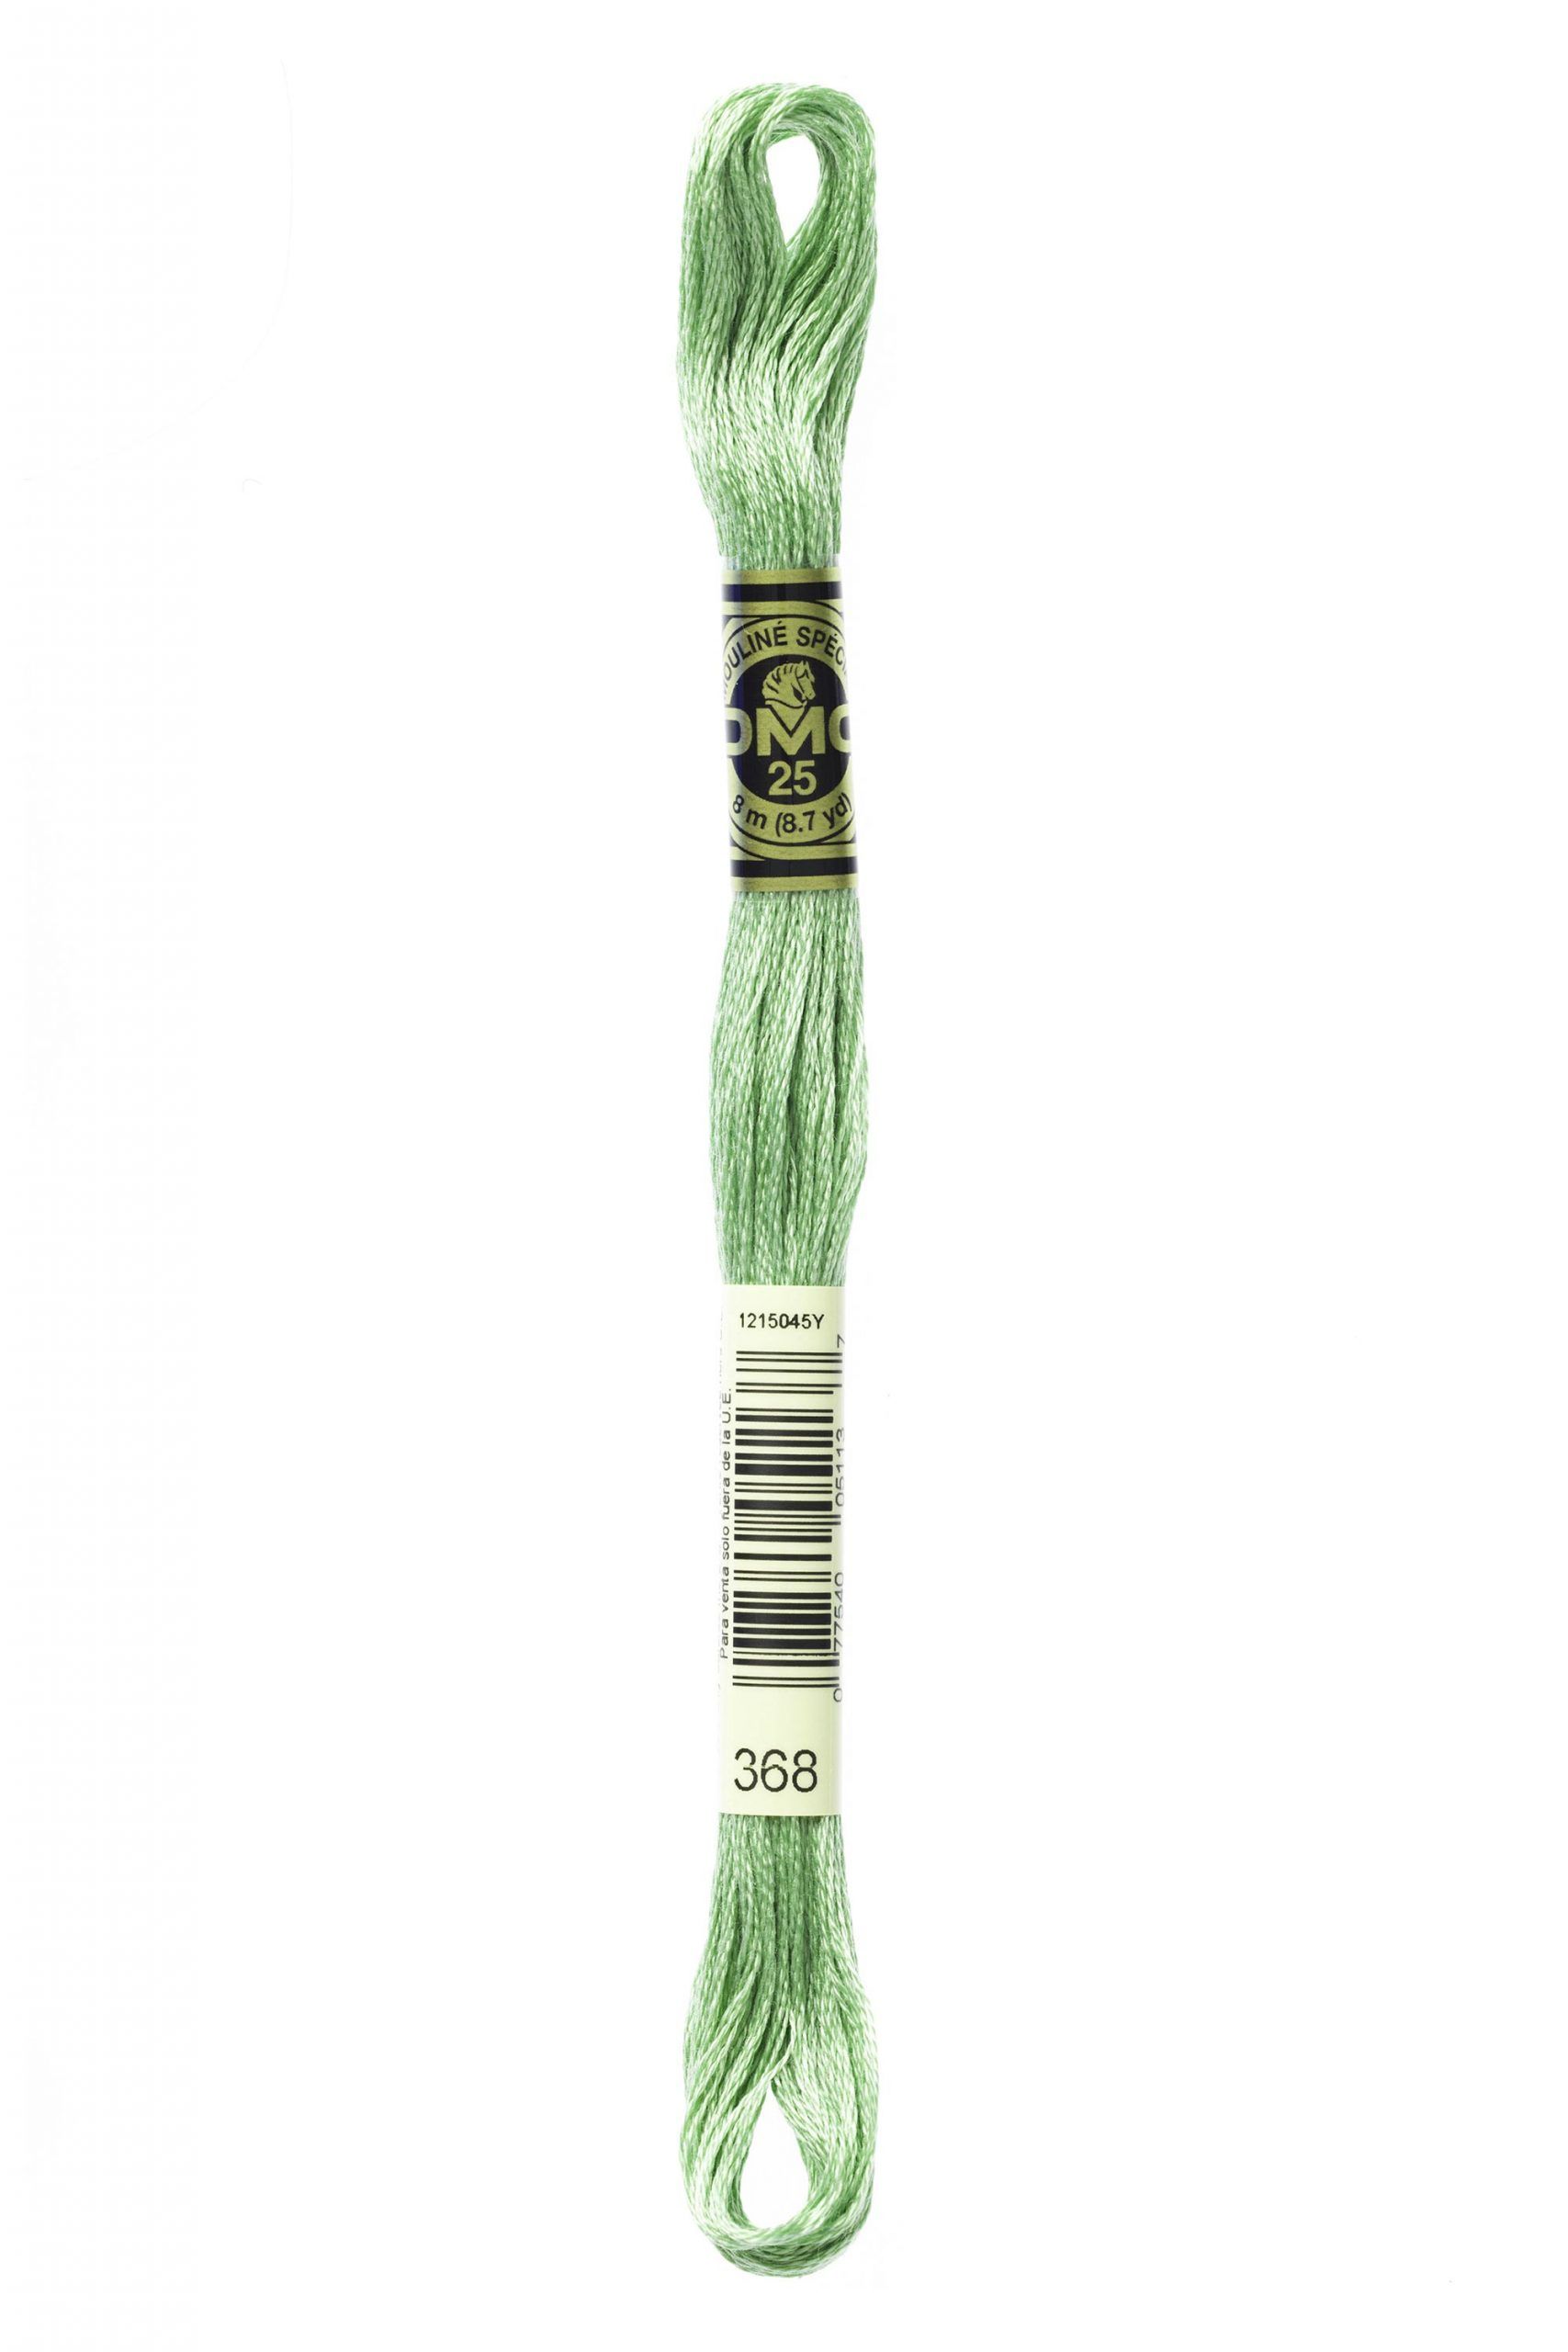 368 - Verde pistacho claro